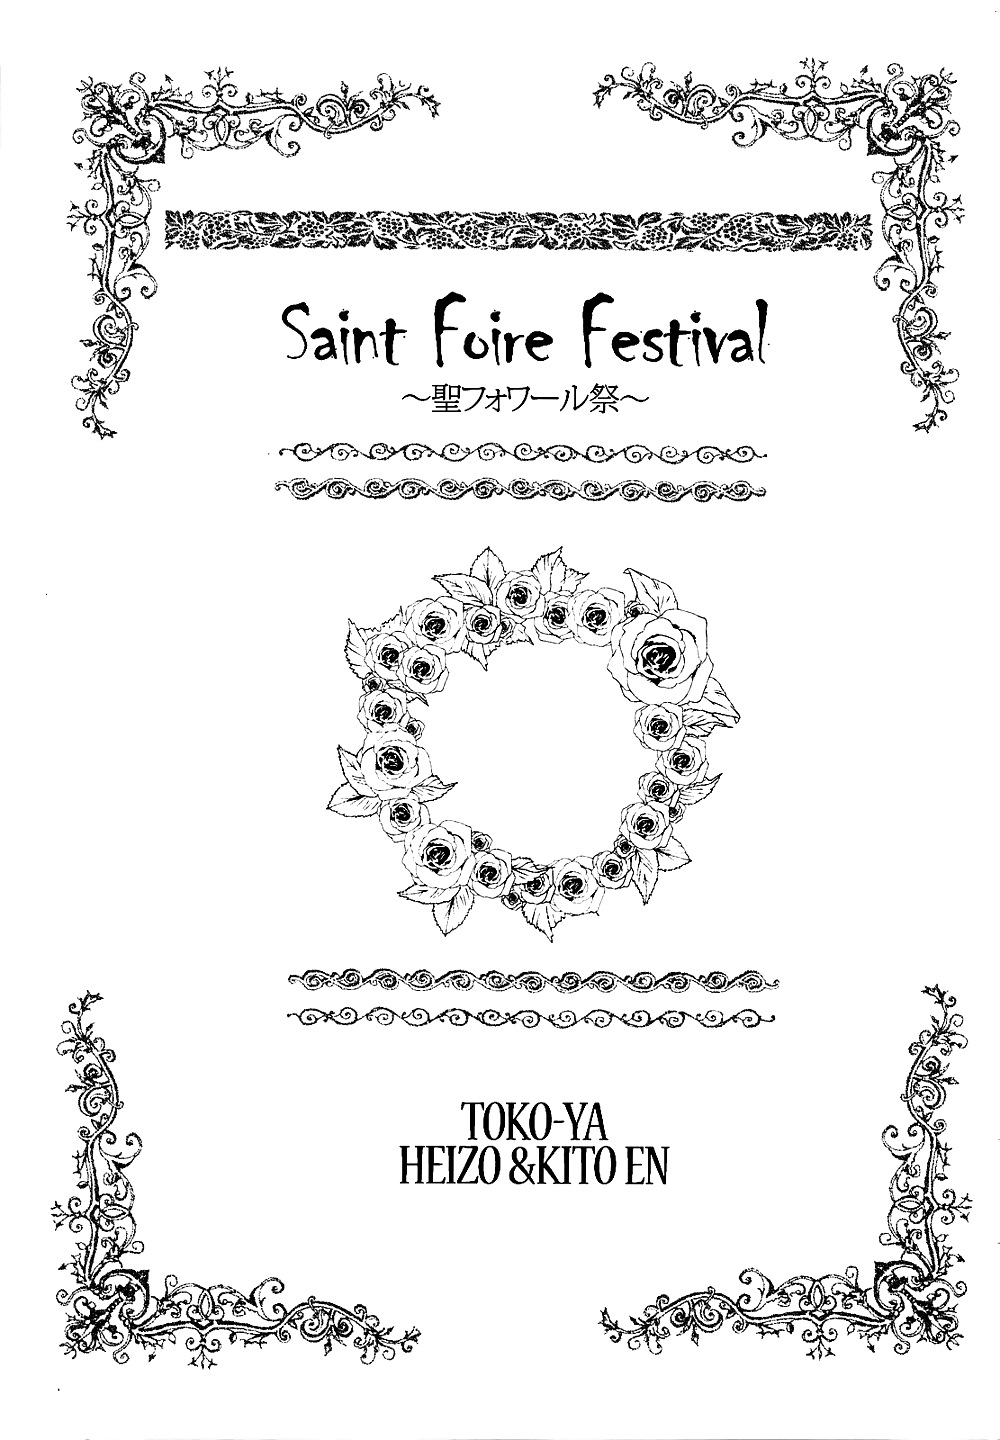 Sex Gallery Toko-Ya, Saint Foire Festival 01